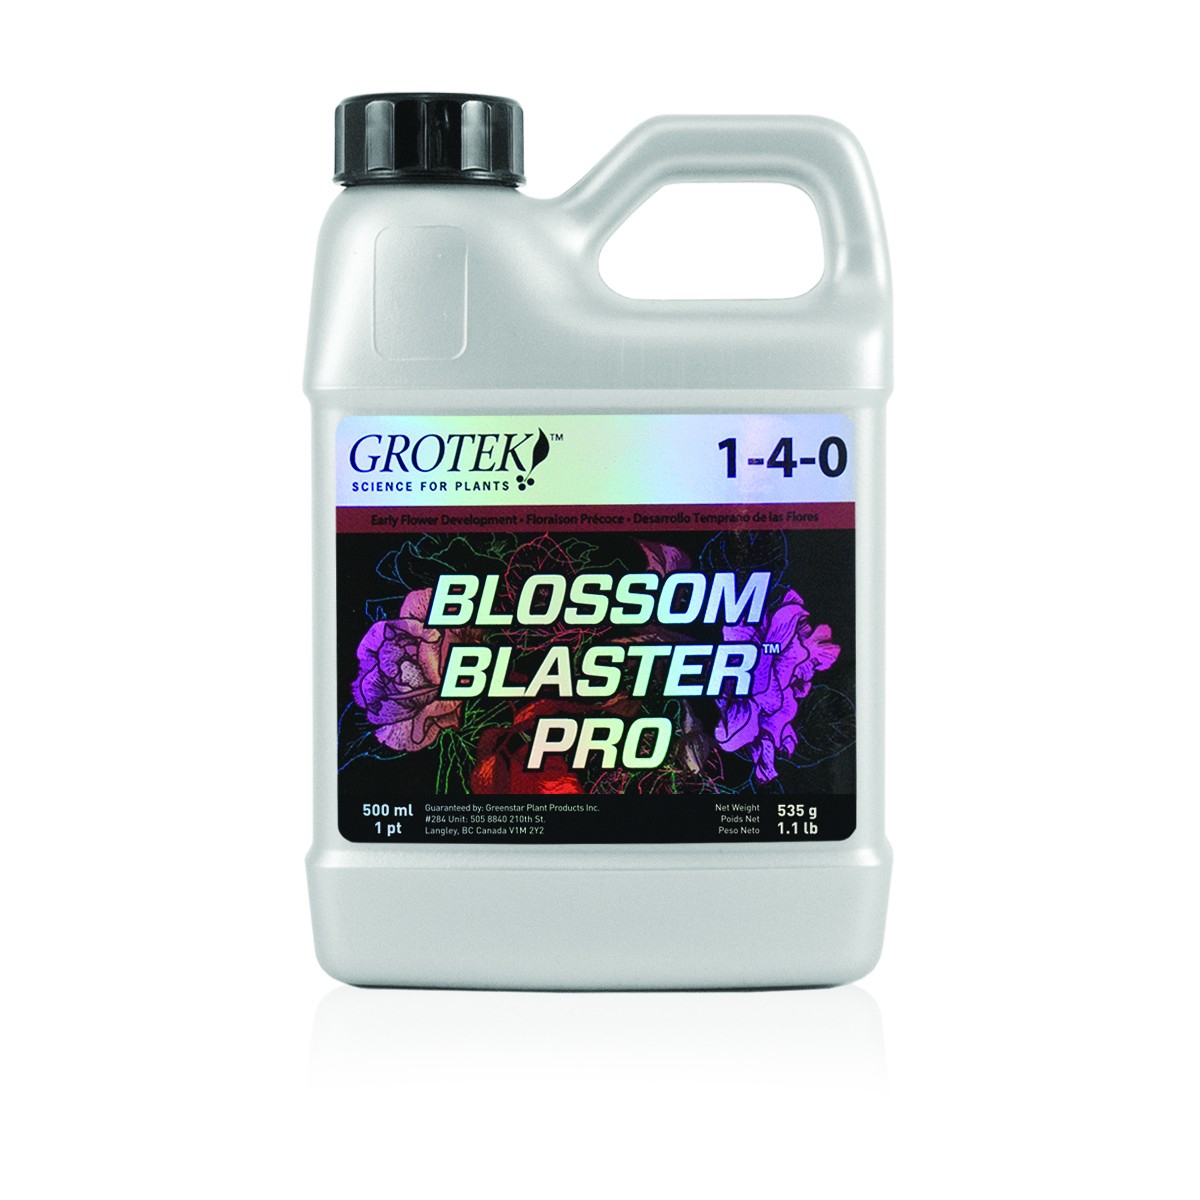 GROTEK Blossom Blaster Pro 500ml